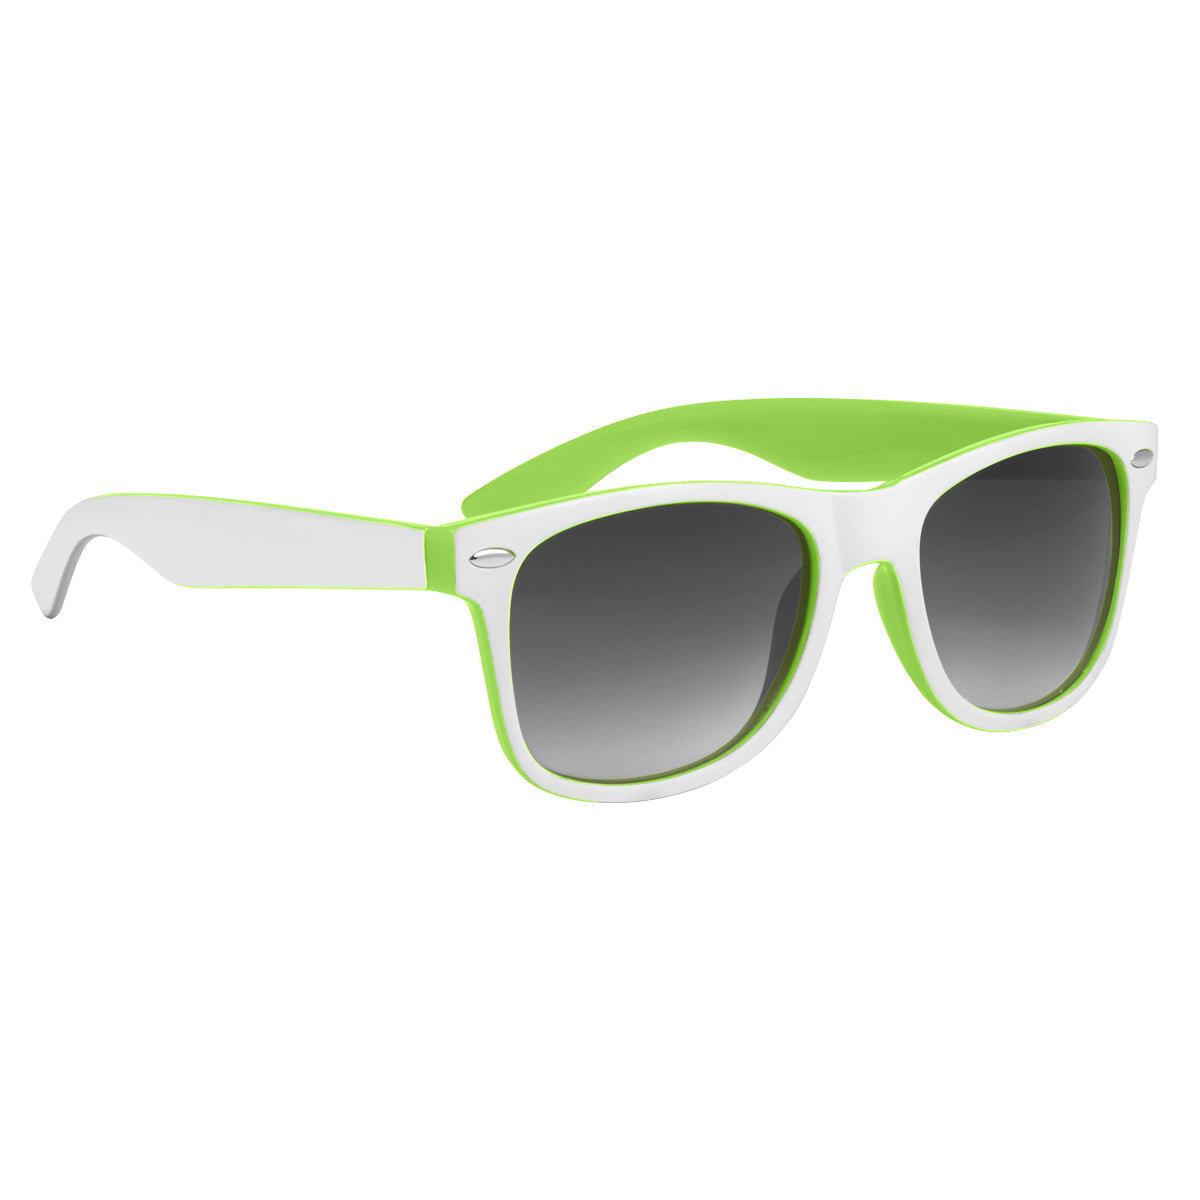 Two-Tone Malibu Sunglasses Sunglasses Hit Promo Lime Green & White Single Color 